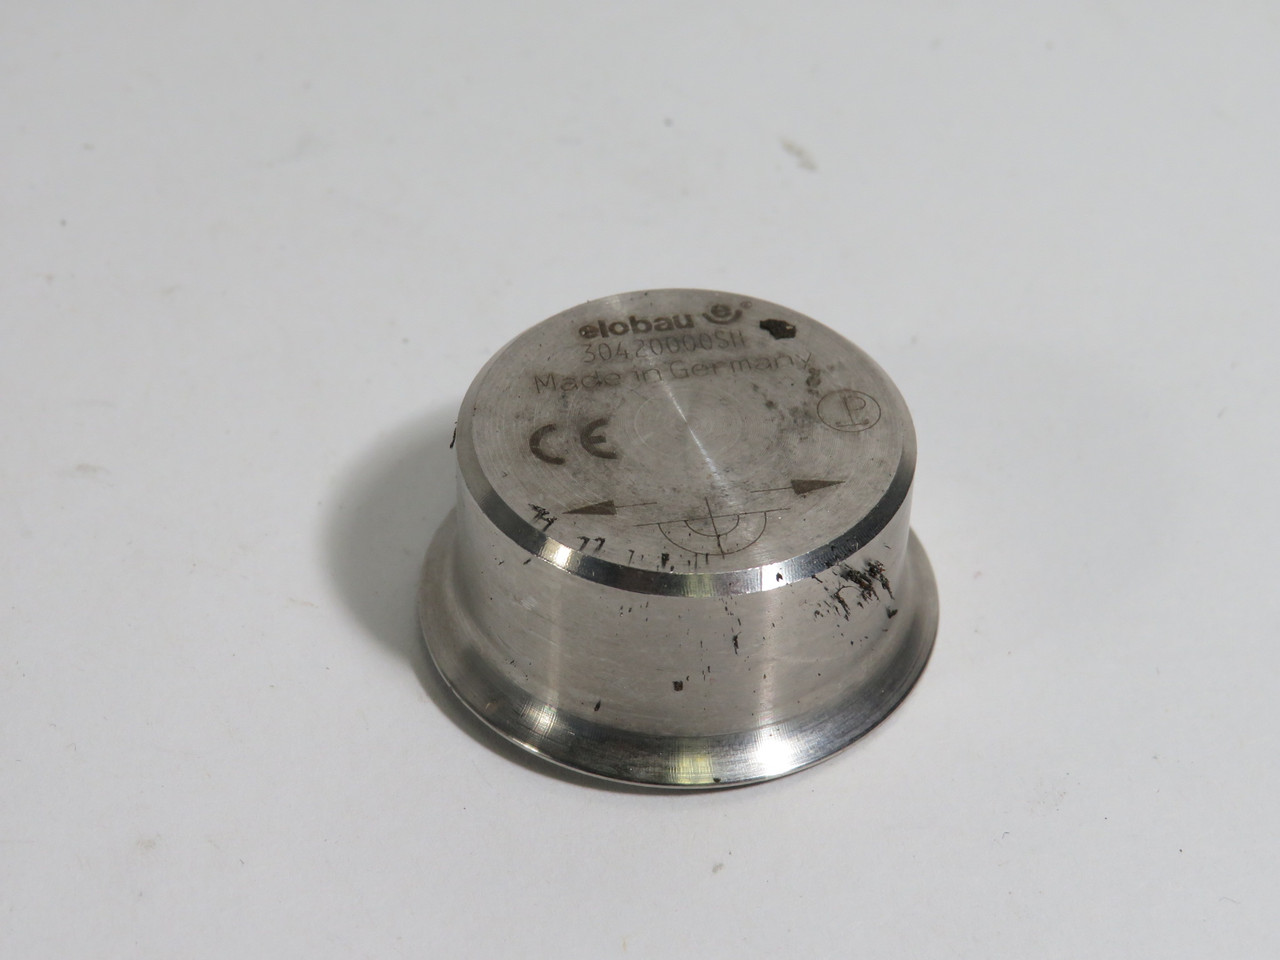 Elobau 30420000SH Magnetic Actuator USED